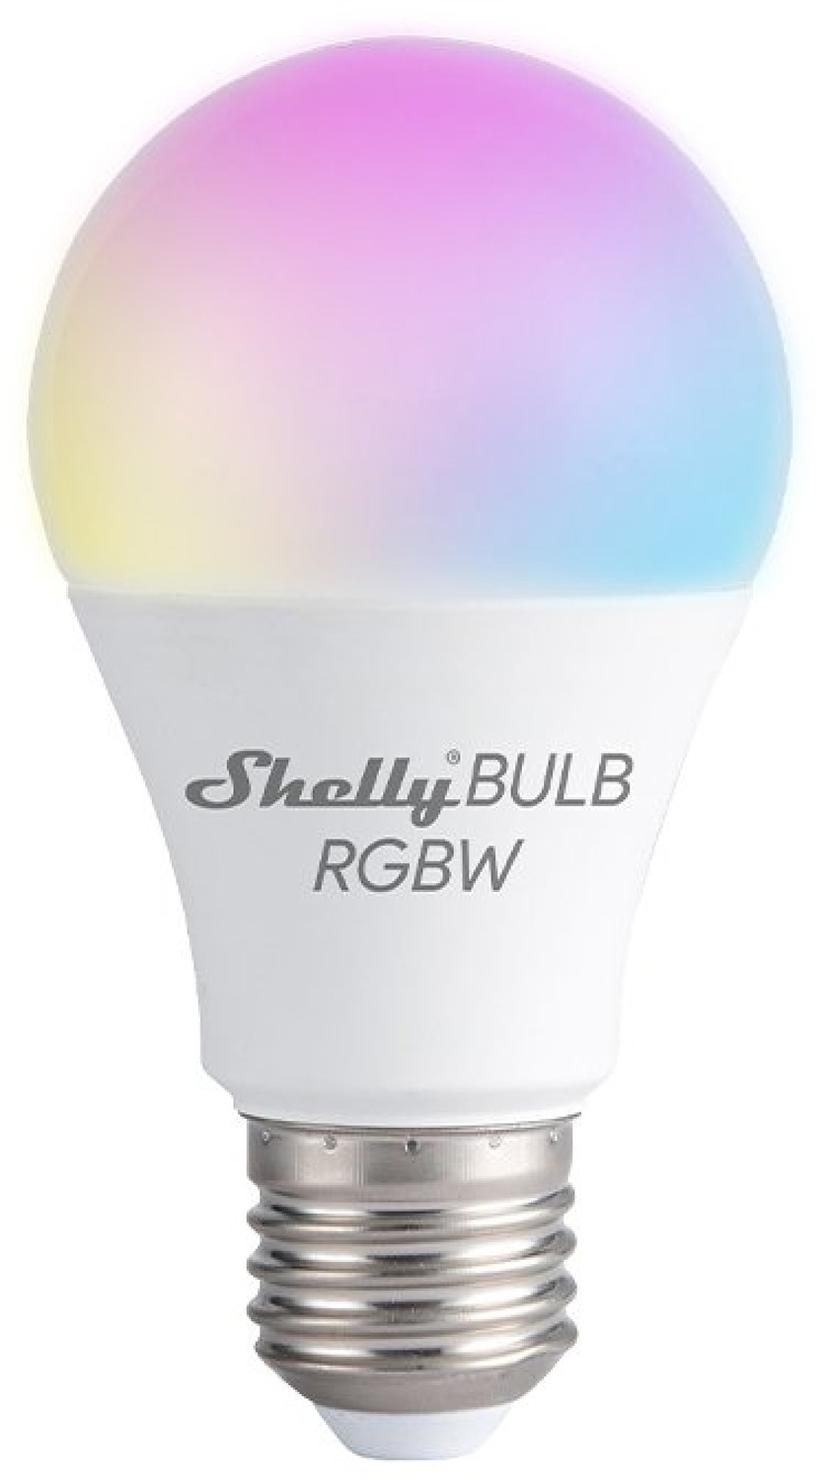 Shelly Duo Rgbw E27 Wifi Bulb